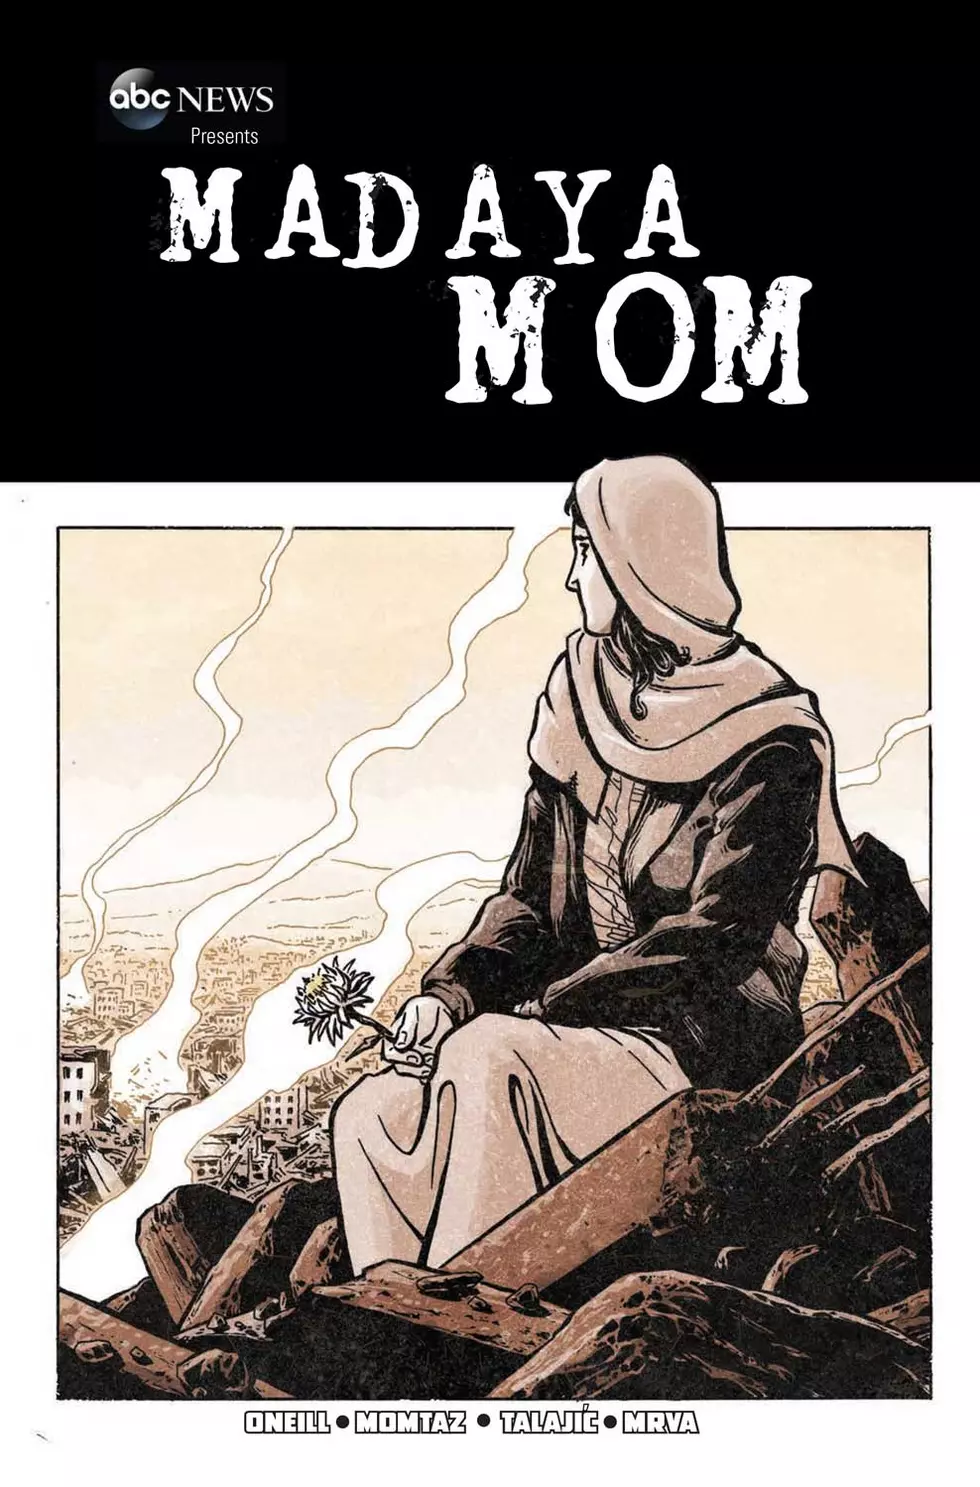 Marvel And ABC News Partner To Tell Story Of A Syrian Family&#8217;s Struggle In &#8216;Madaya Mom&#8217;